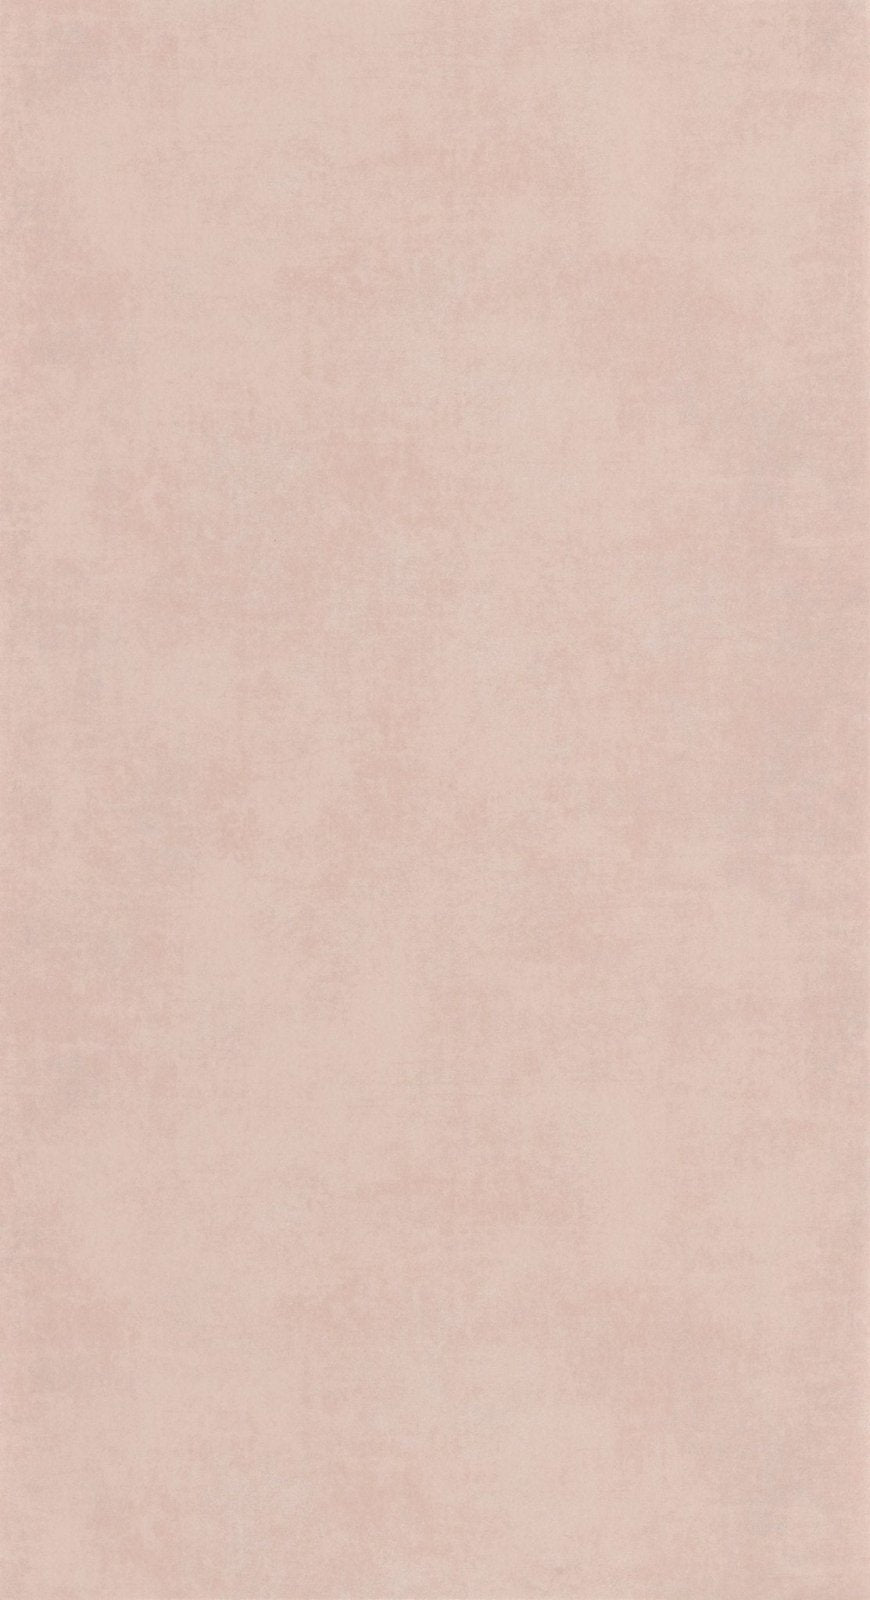 COLR80834174-Casadeco-Casadeco SO Color 5 Stone Uni Collection - Nude Pink Stone Wallpaper-Decor Warehouse